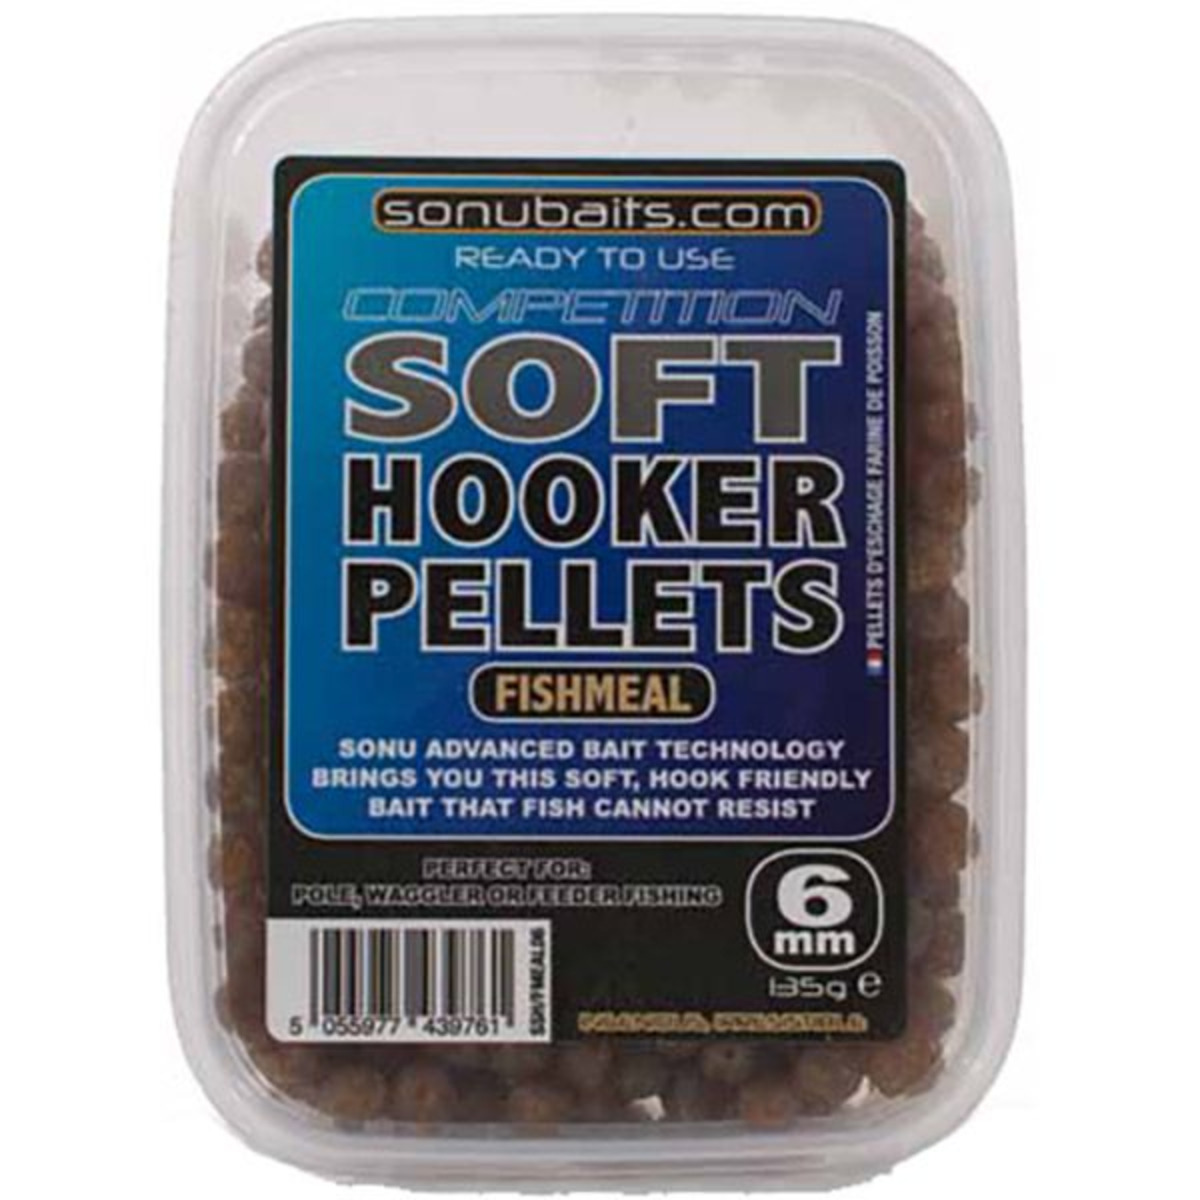 Sonubaits Soft Hooker Pellets Fishmeal - 6 mm 